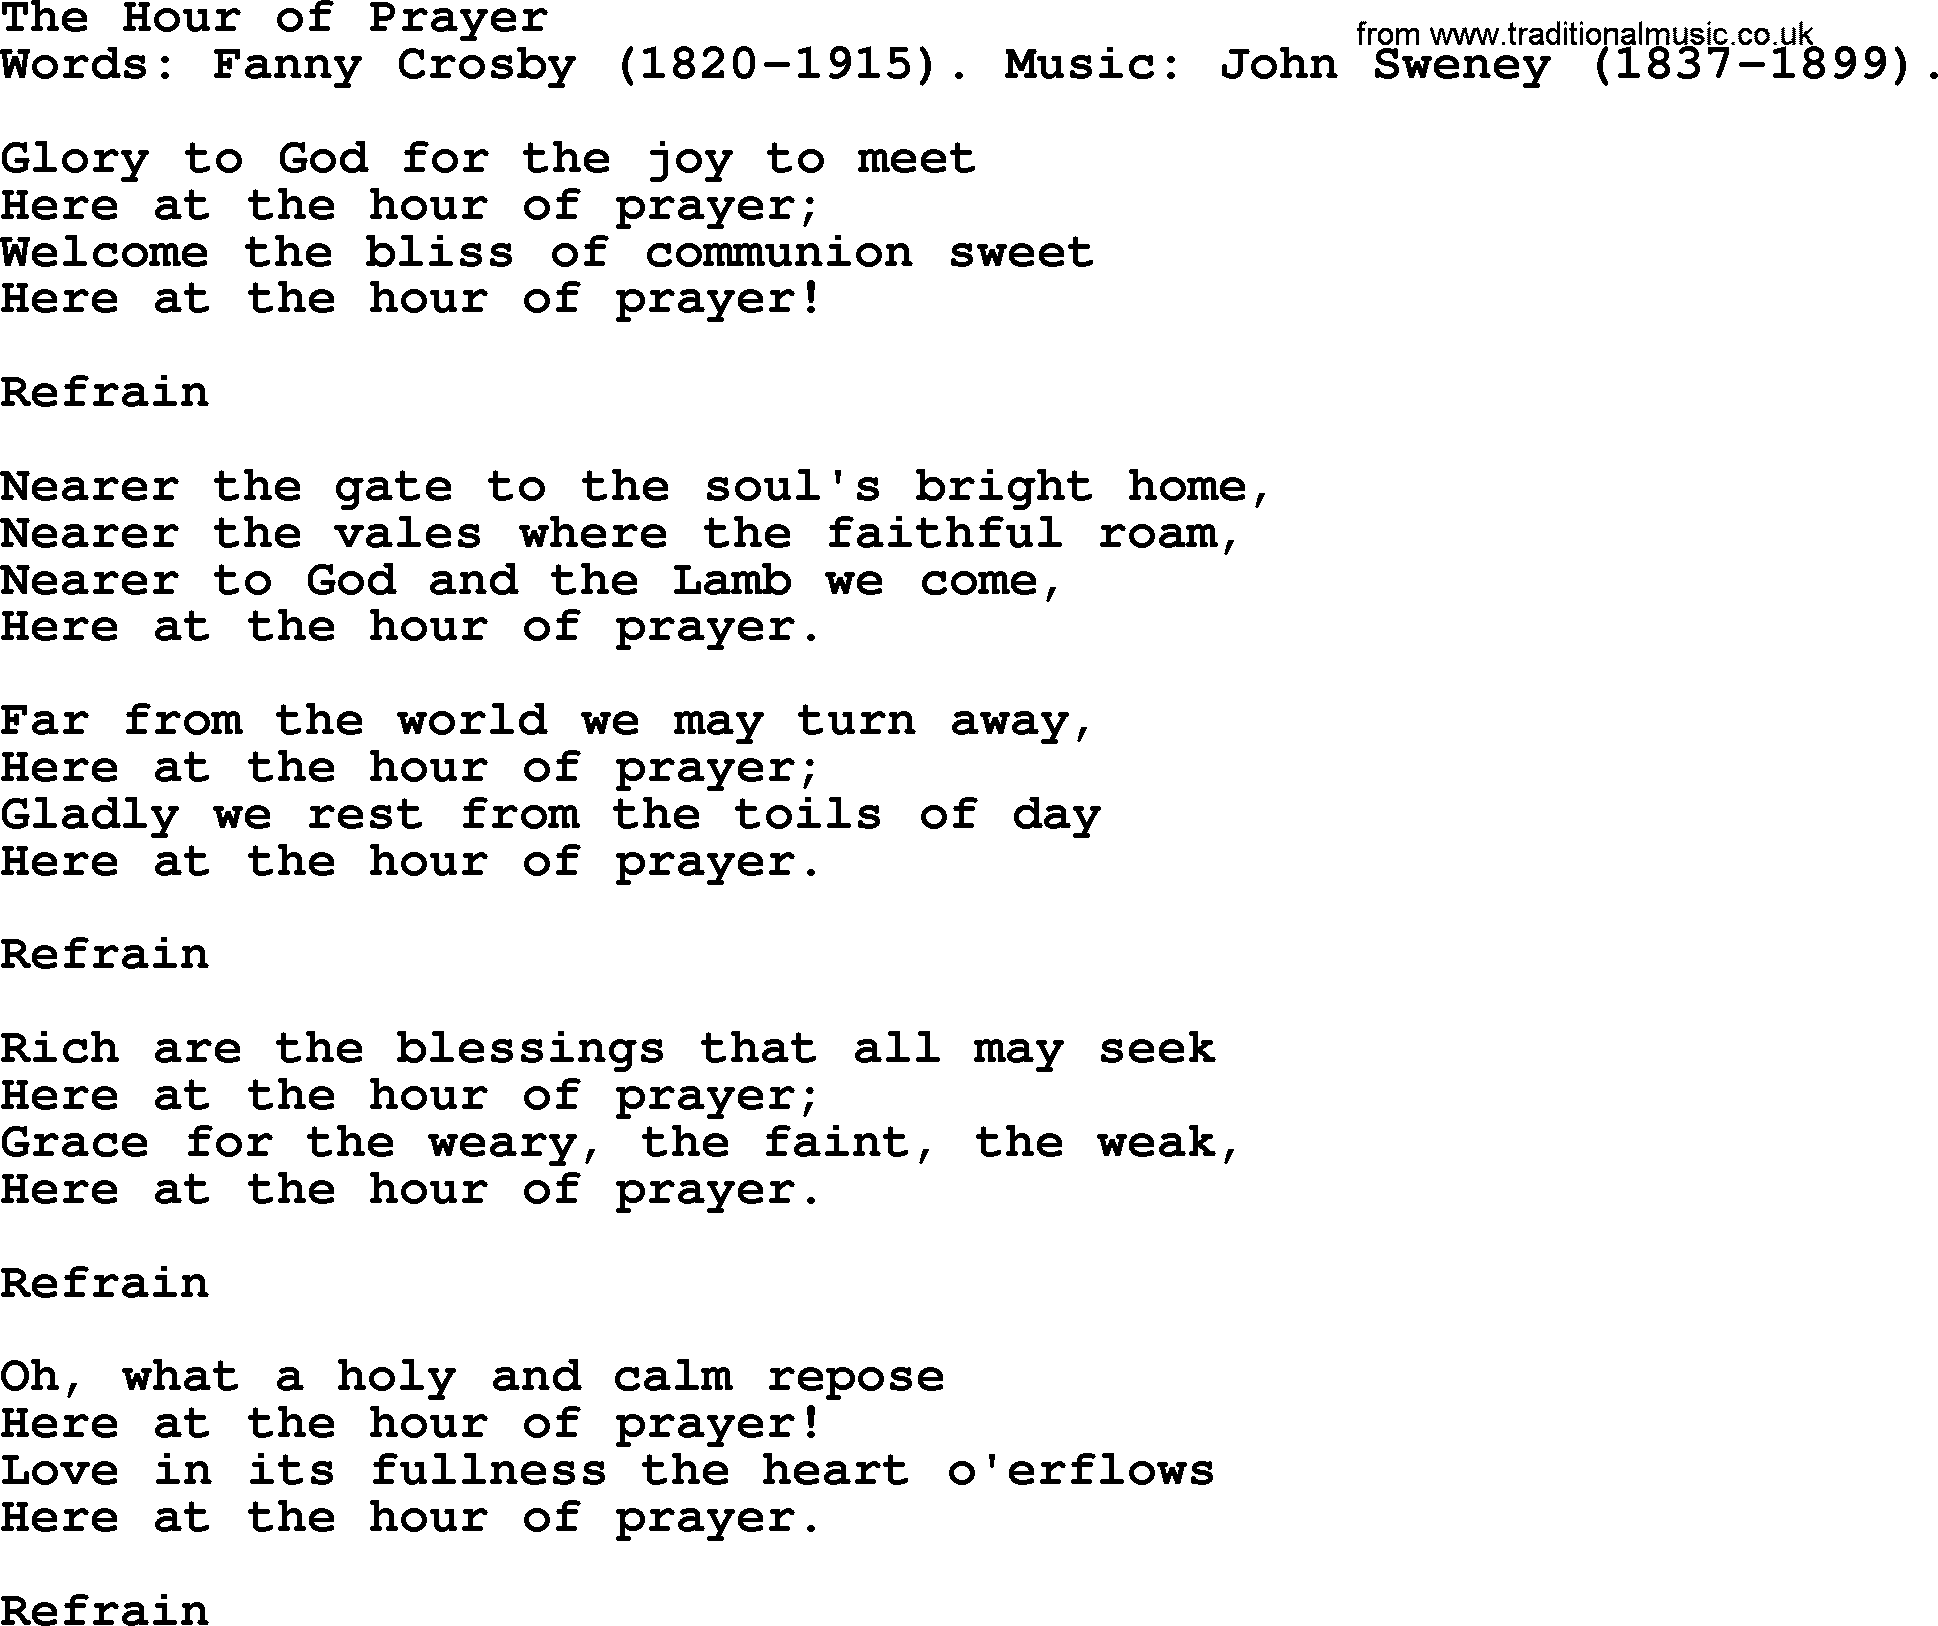 Fanny Crosby song: The Hour Of Prayer, lyrics